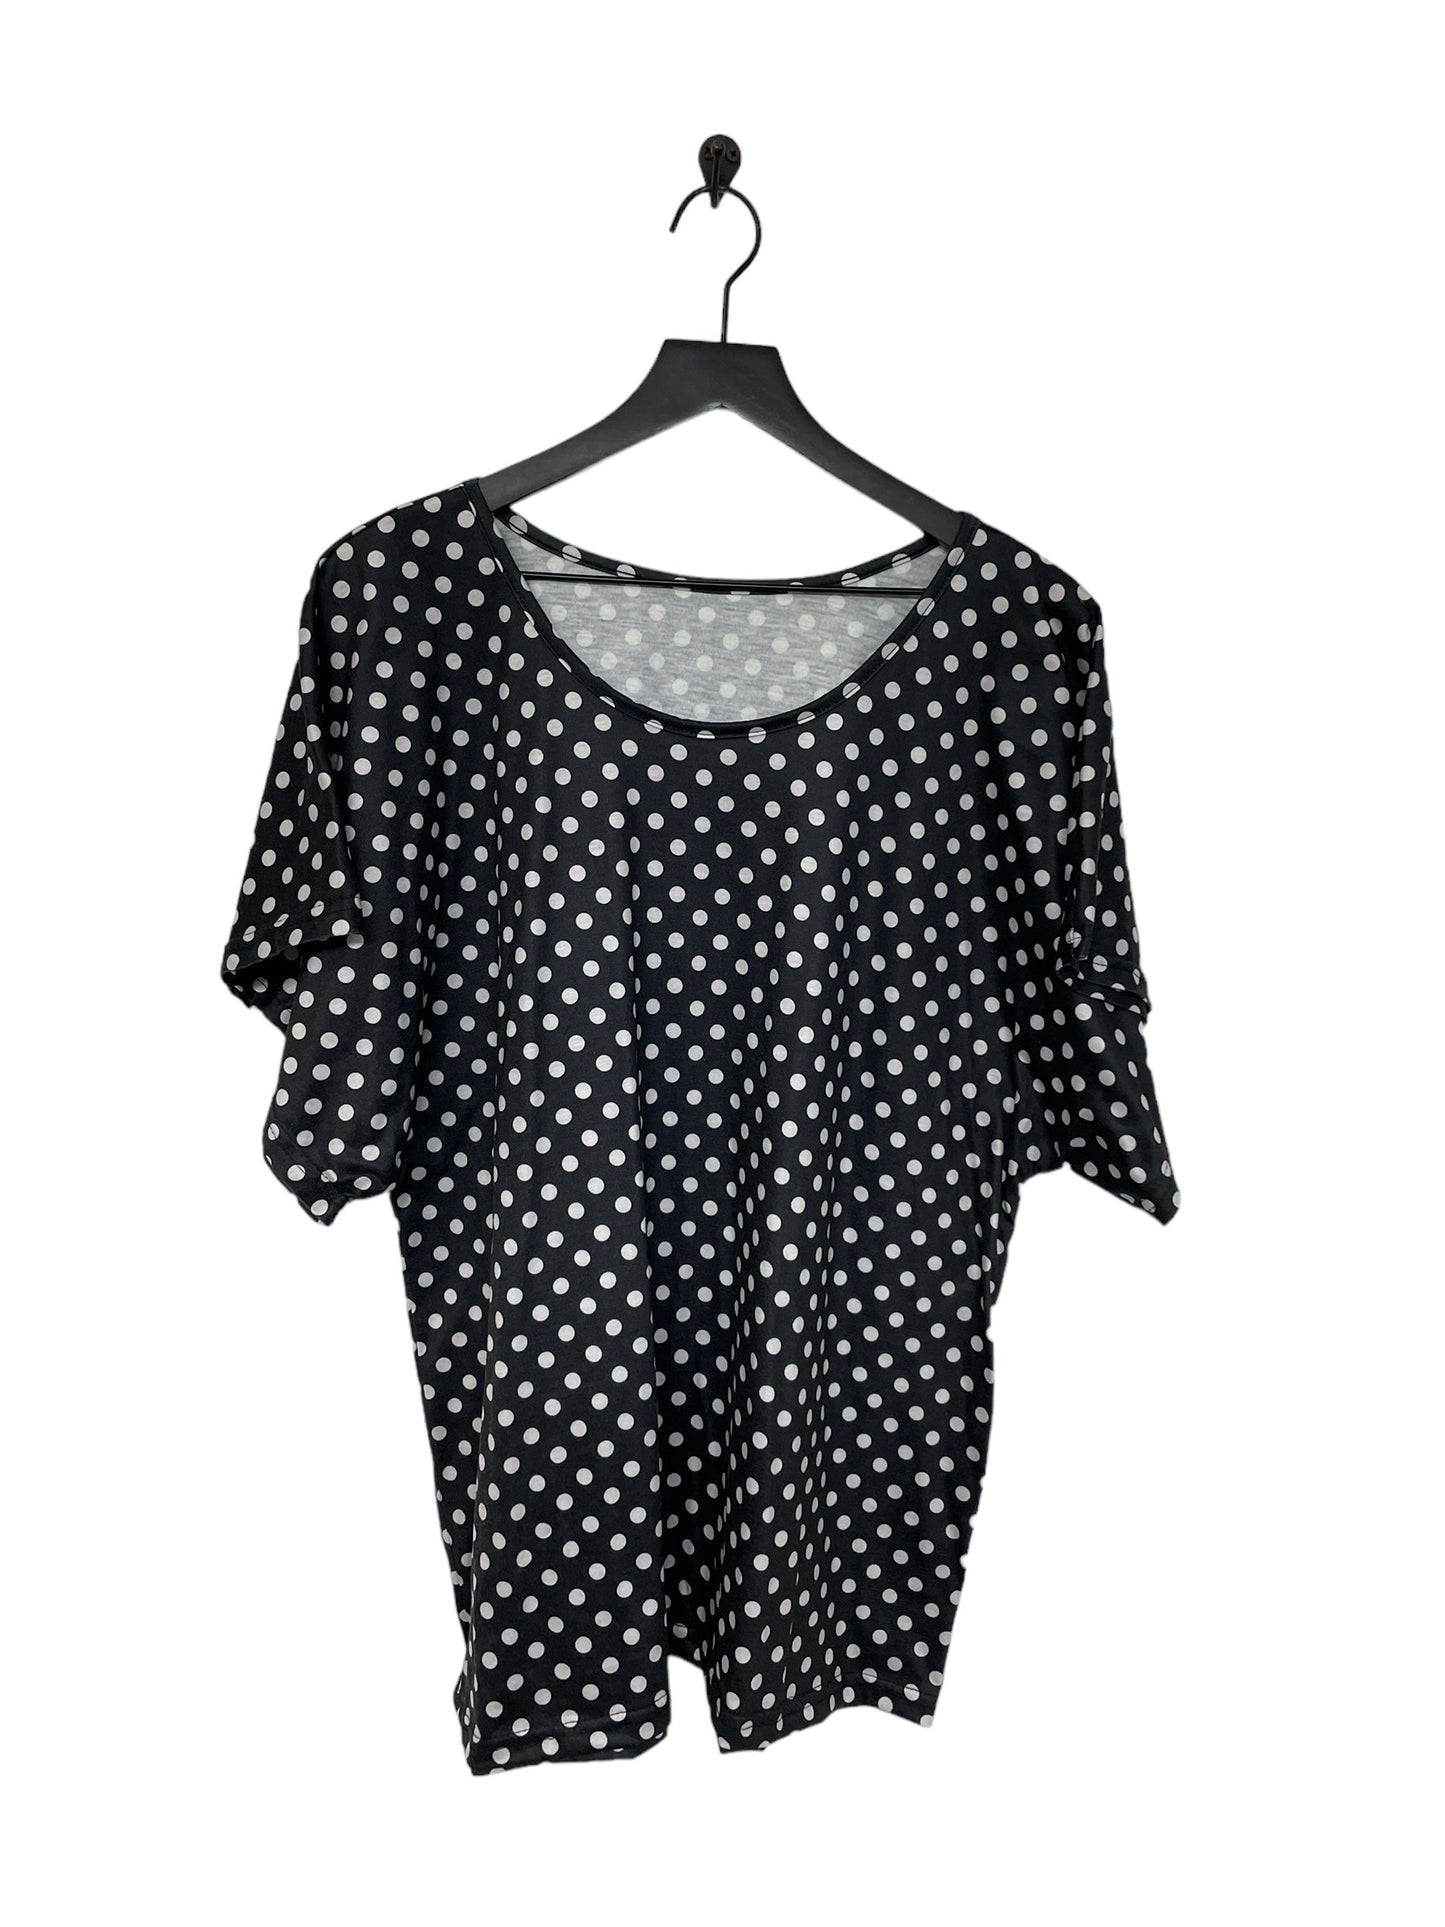 Black & White Top Short Sleeve Basic Cme, Size 2x